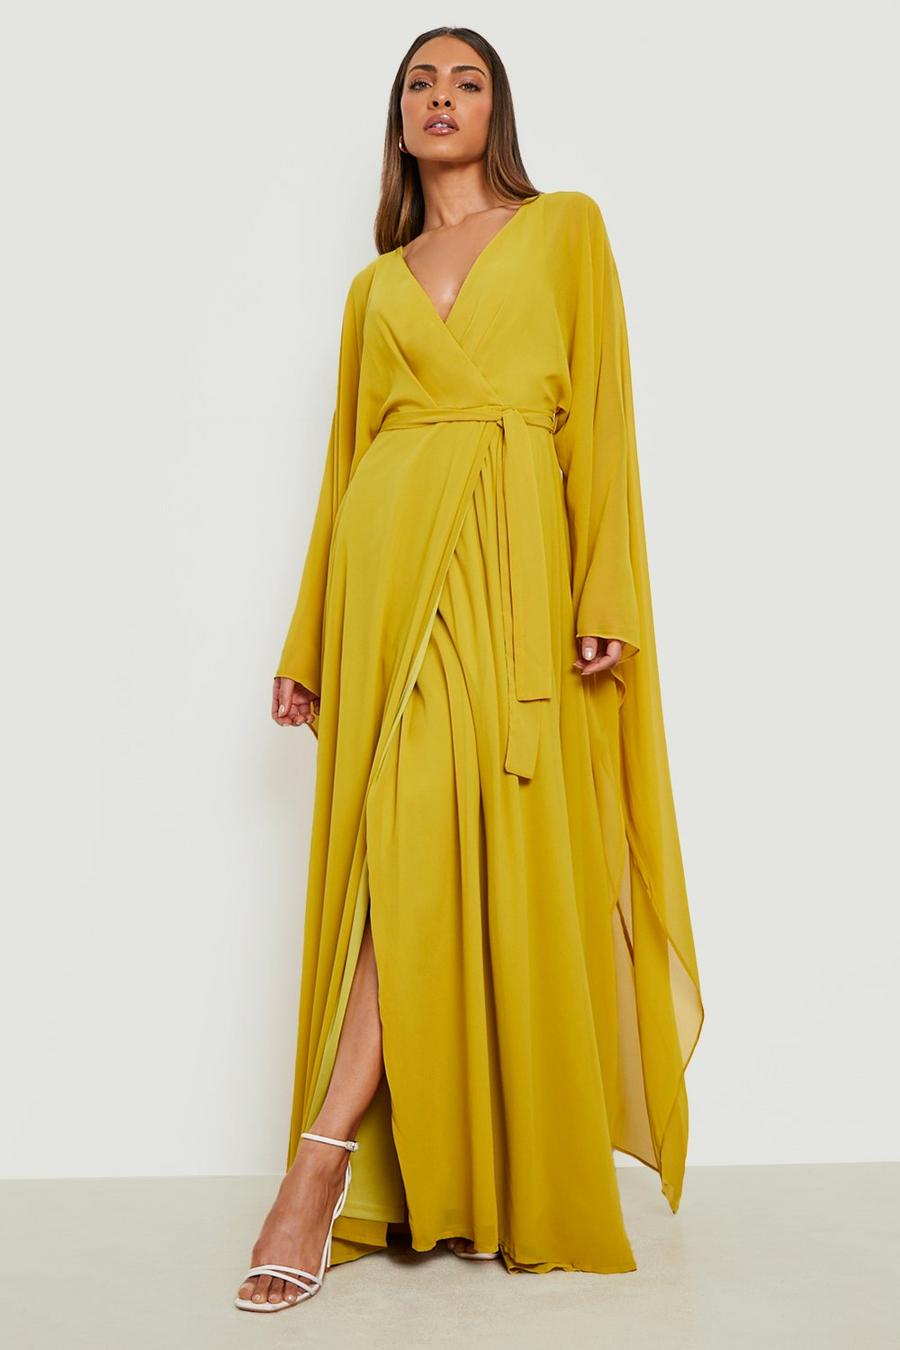 Chartreuse giallo שמלת מקסי מעטפת מבד שיפון עם שרוולי שכמייה